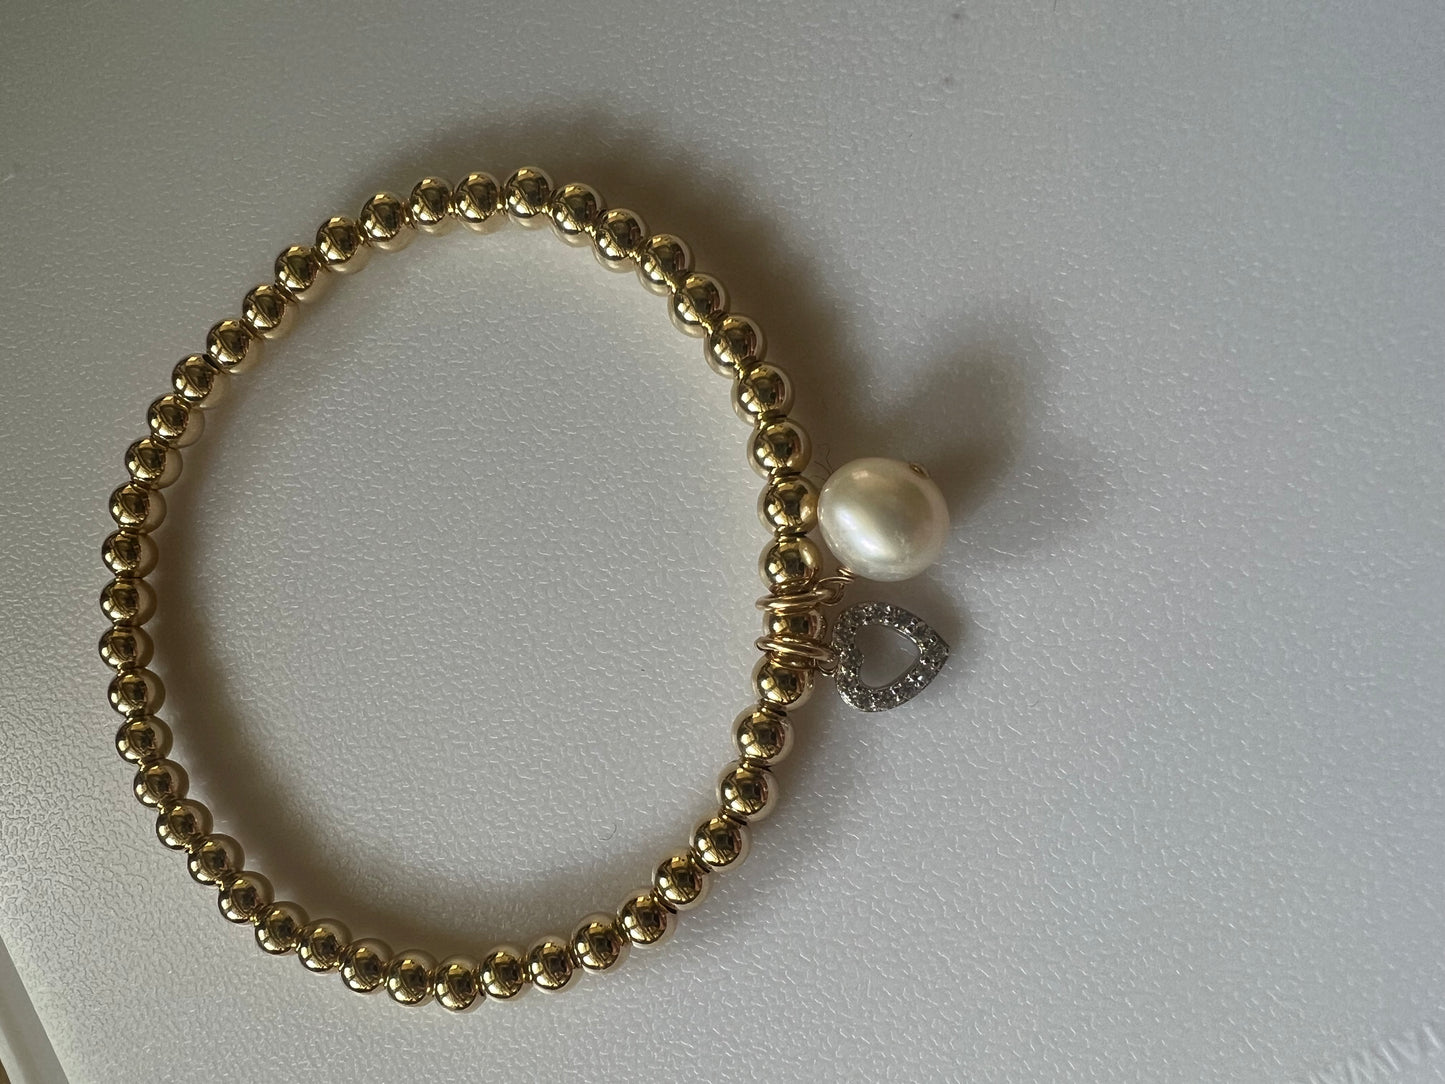 Gold filled bead charm bracelet